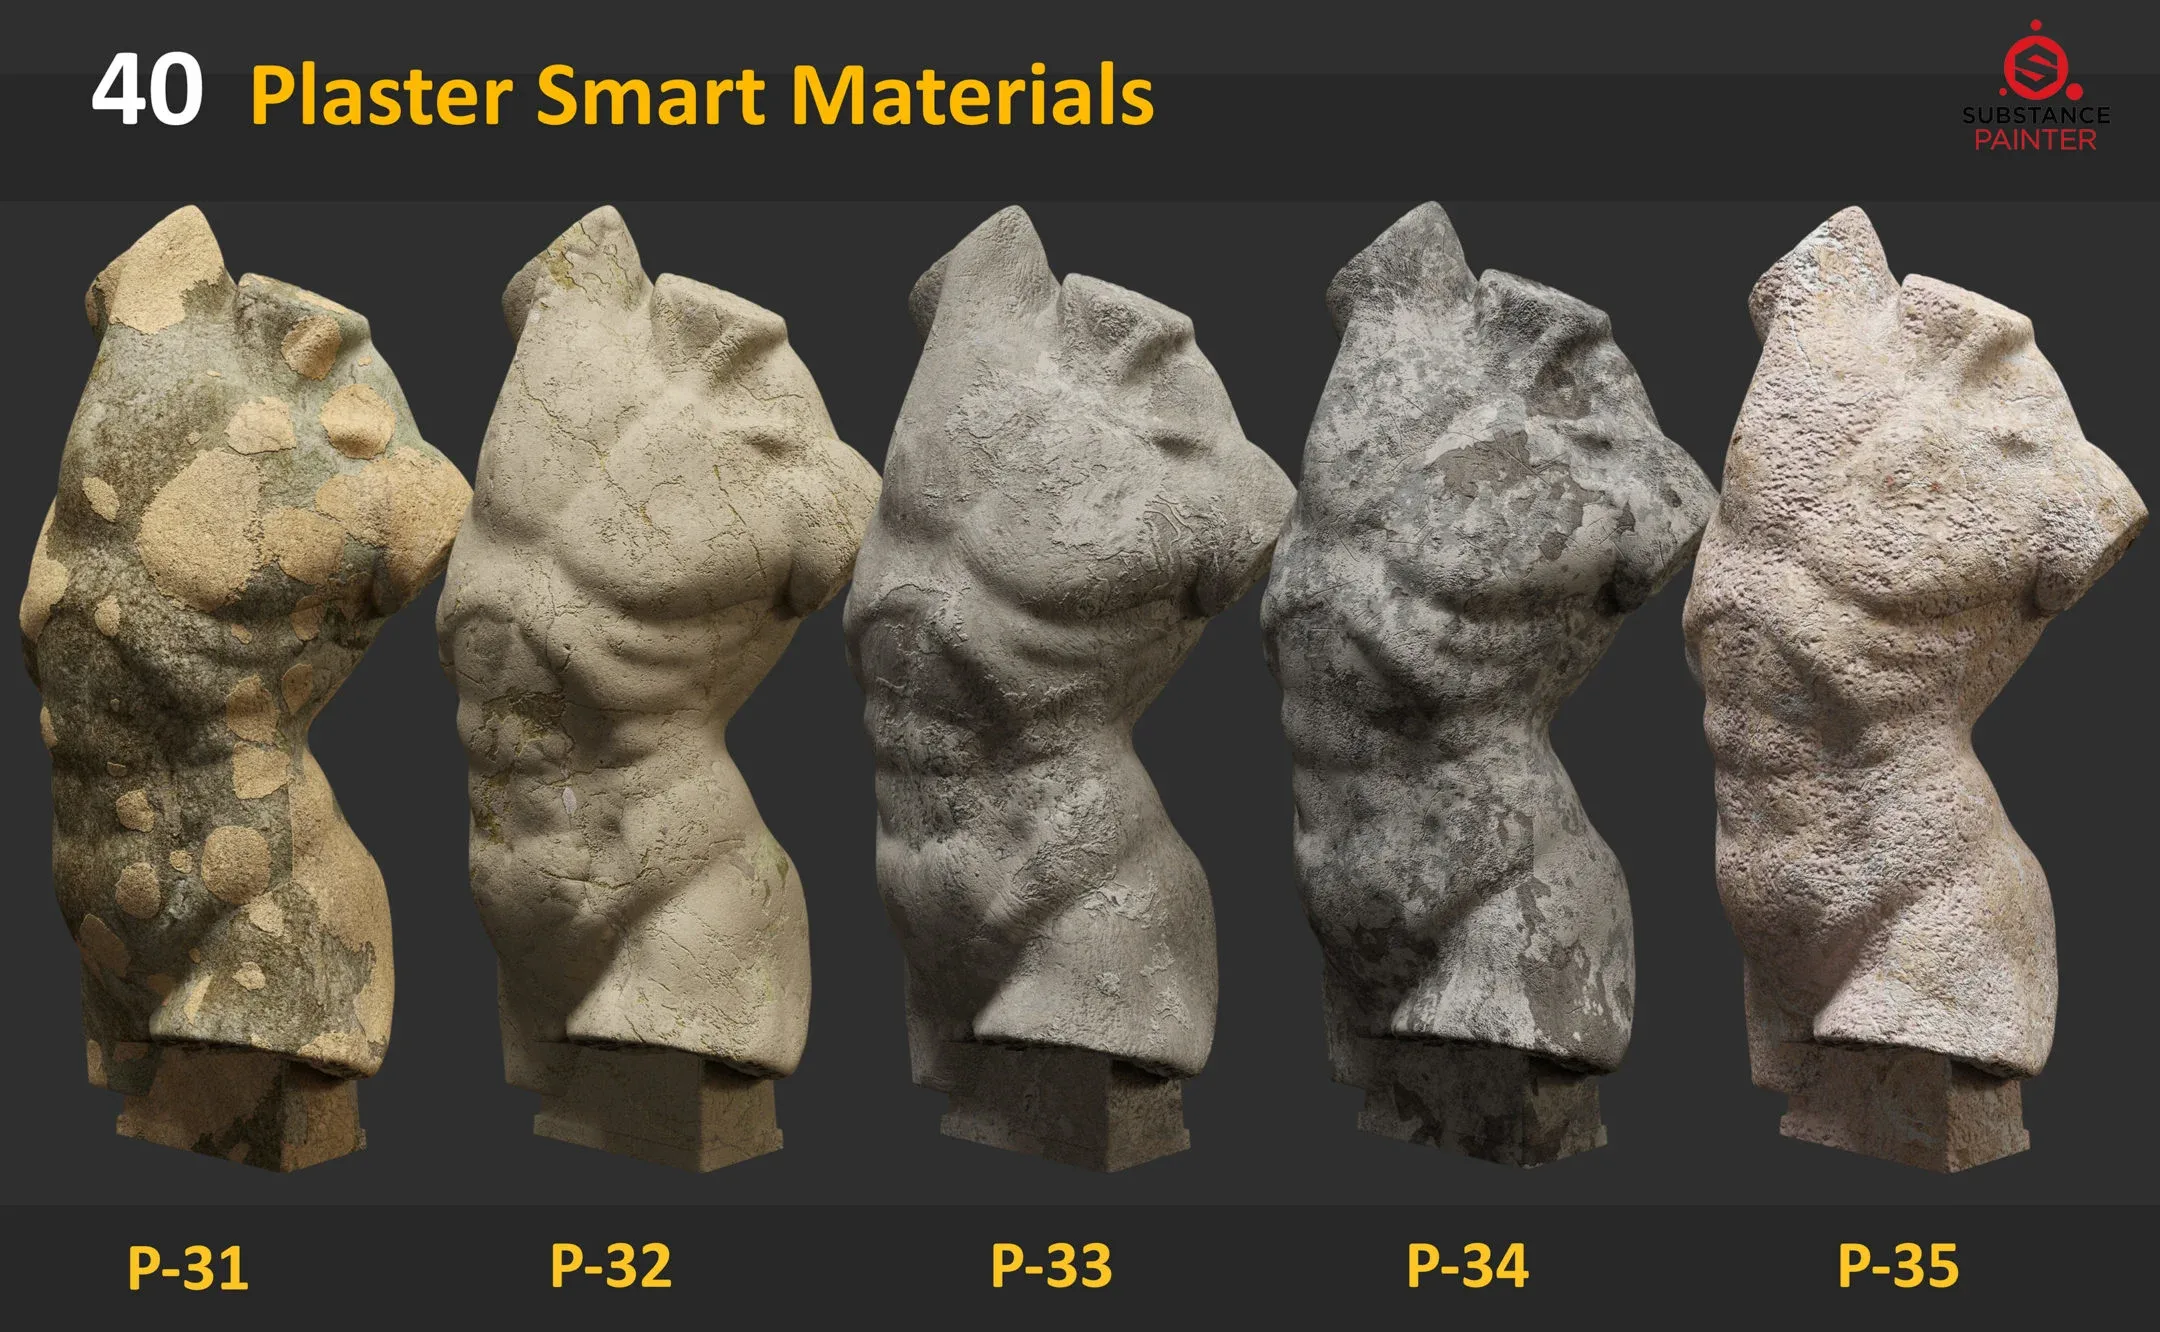 40 Plaster Smart Materials